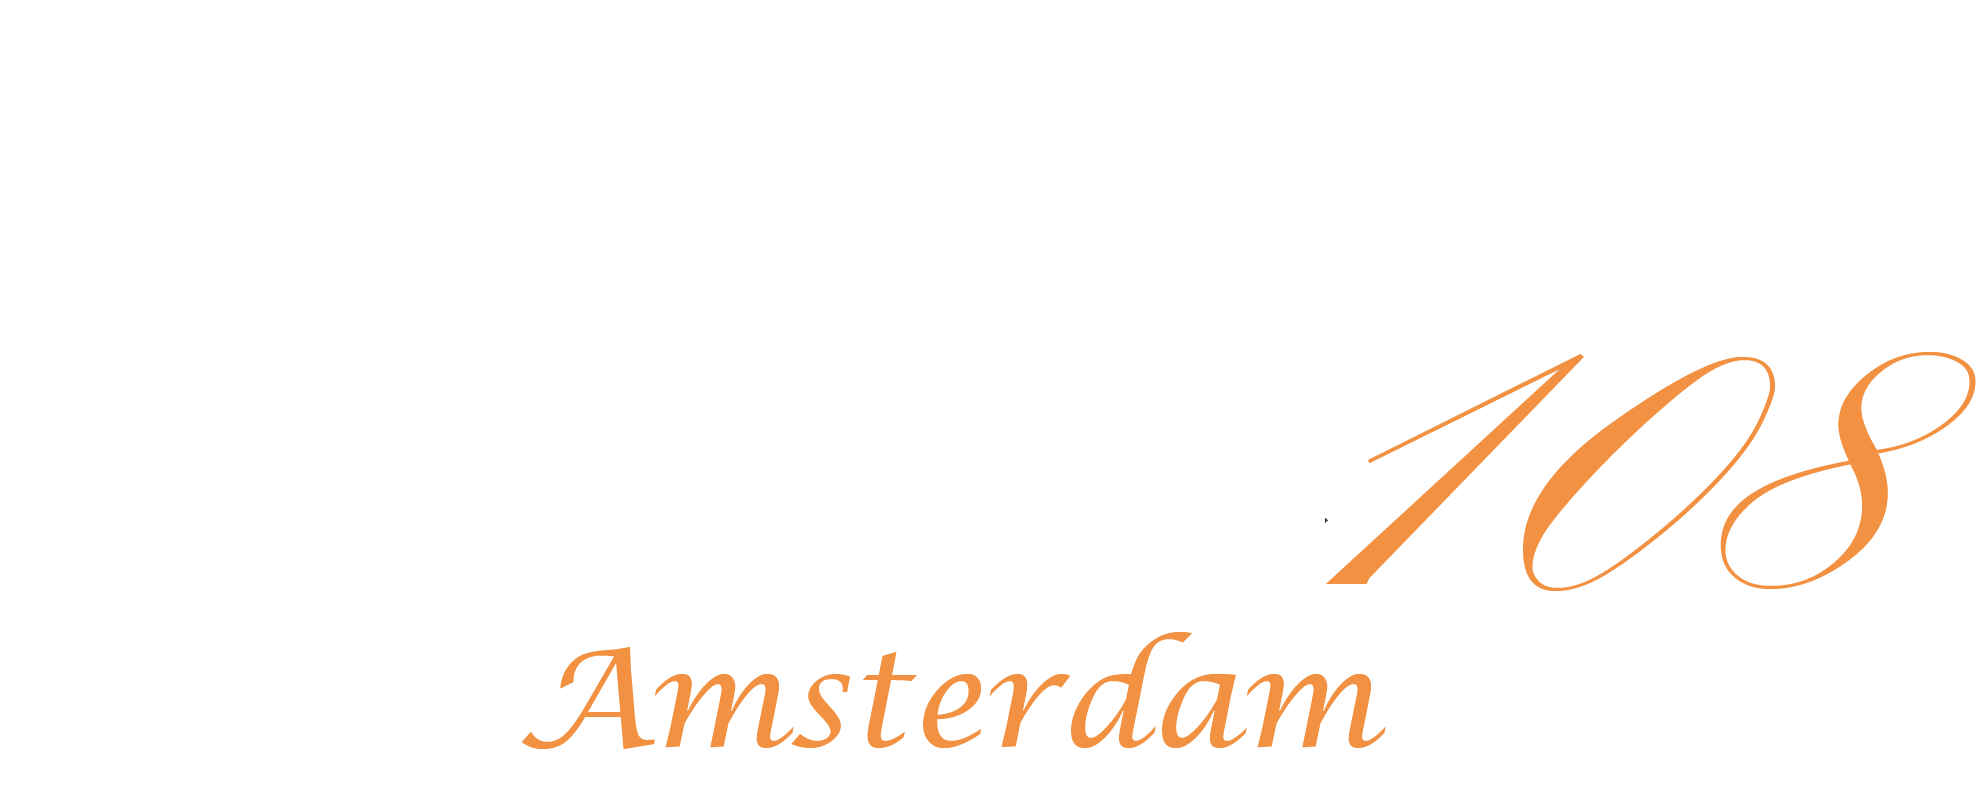 Room108 Amsterdam logo-neg